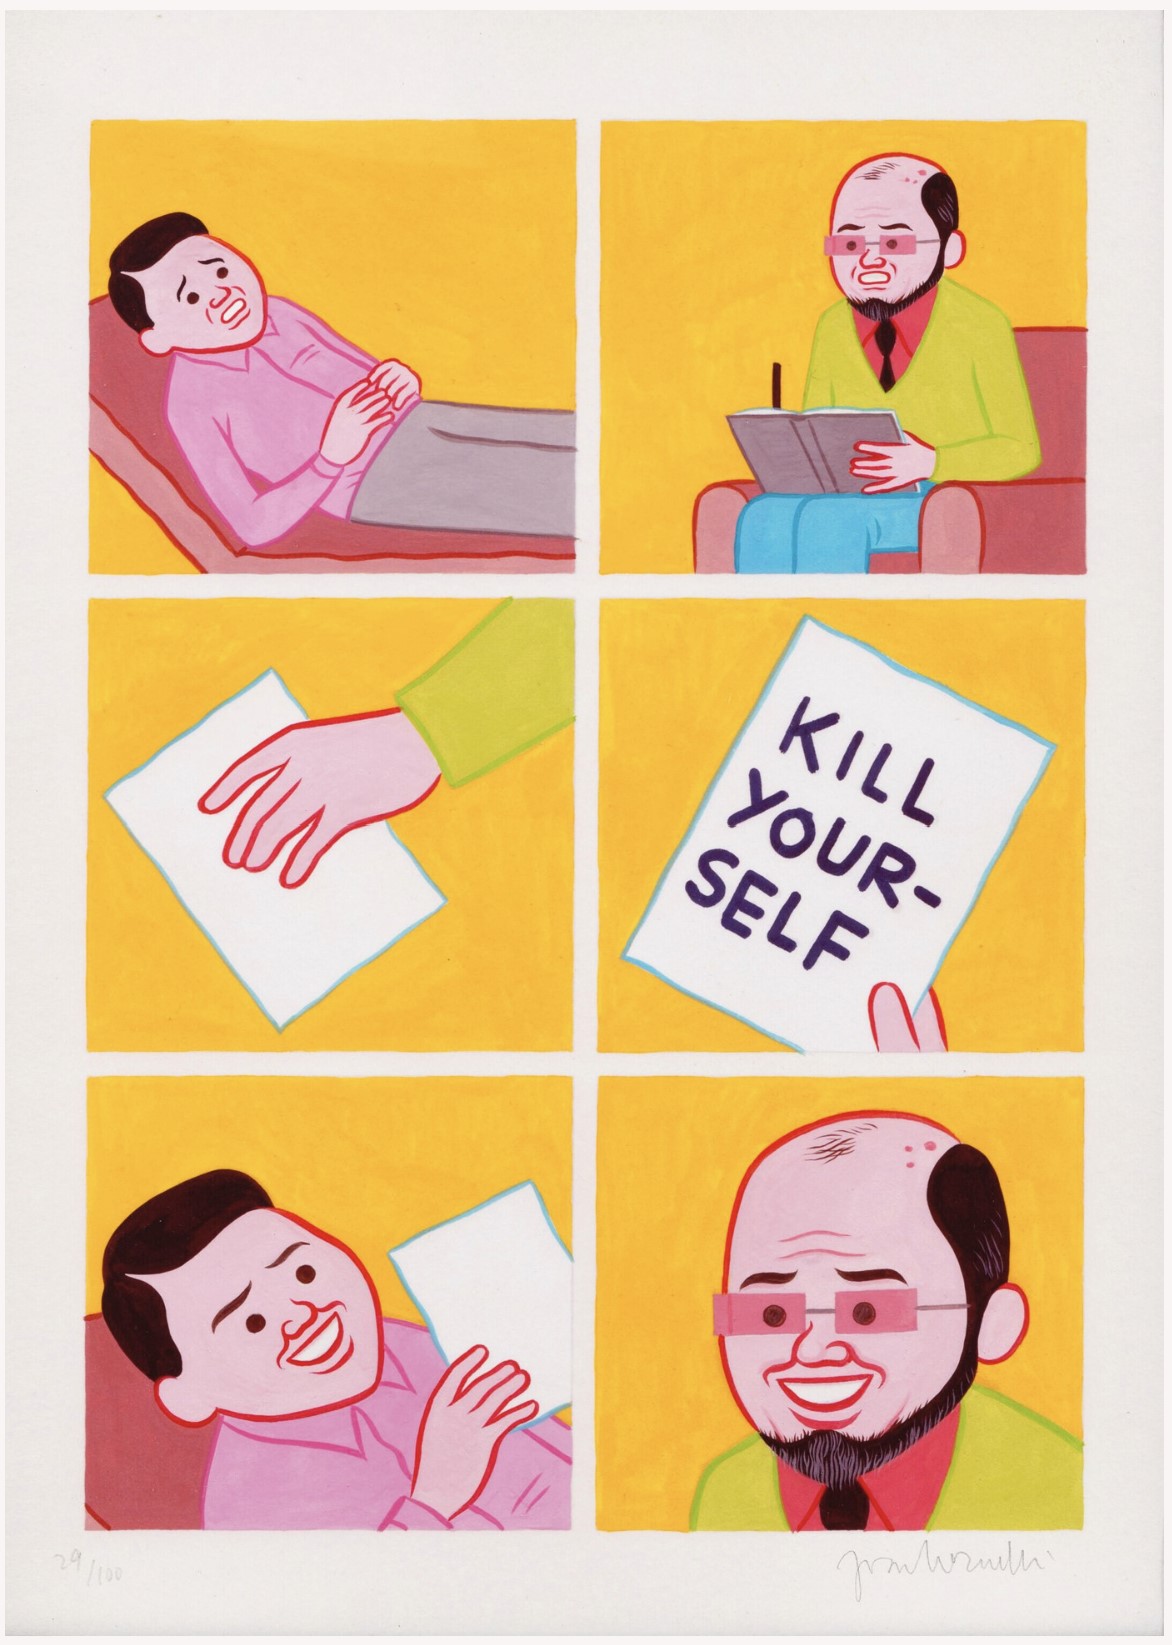 Kill Yourself